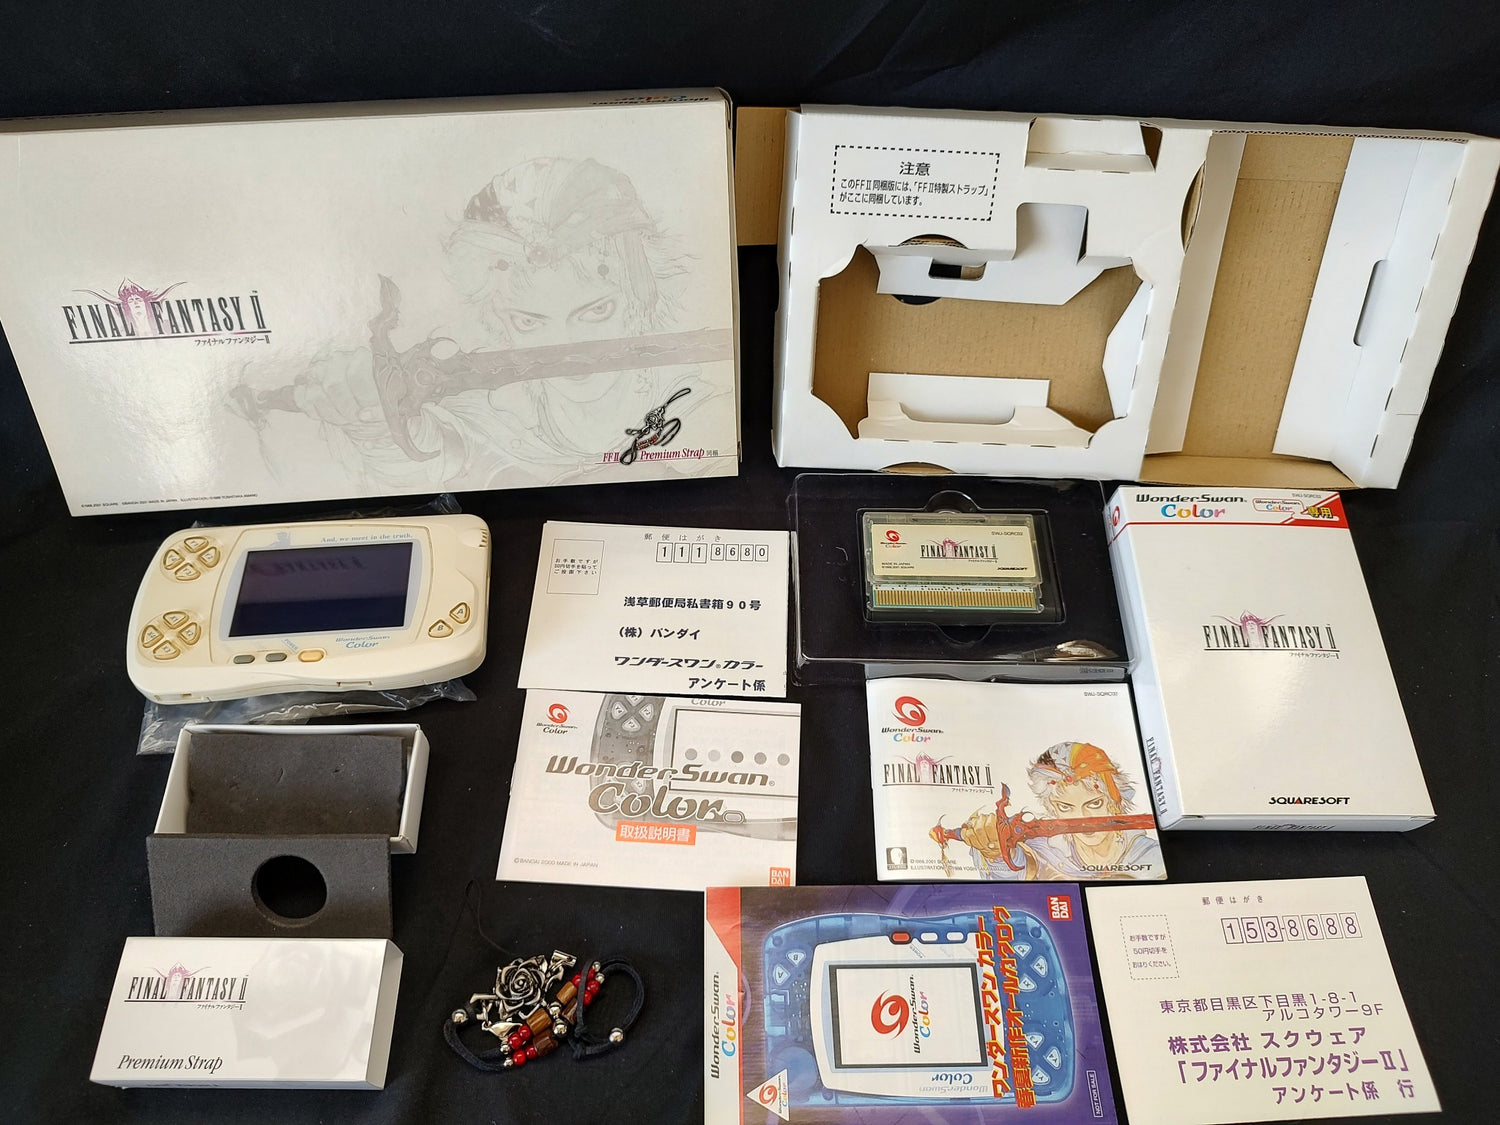 BANDAI Wonder Swan Color Final Fantasy 2 Limited model console